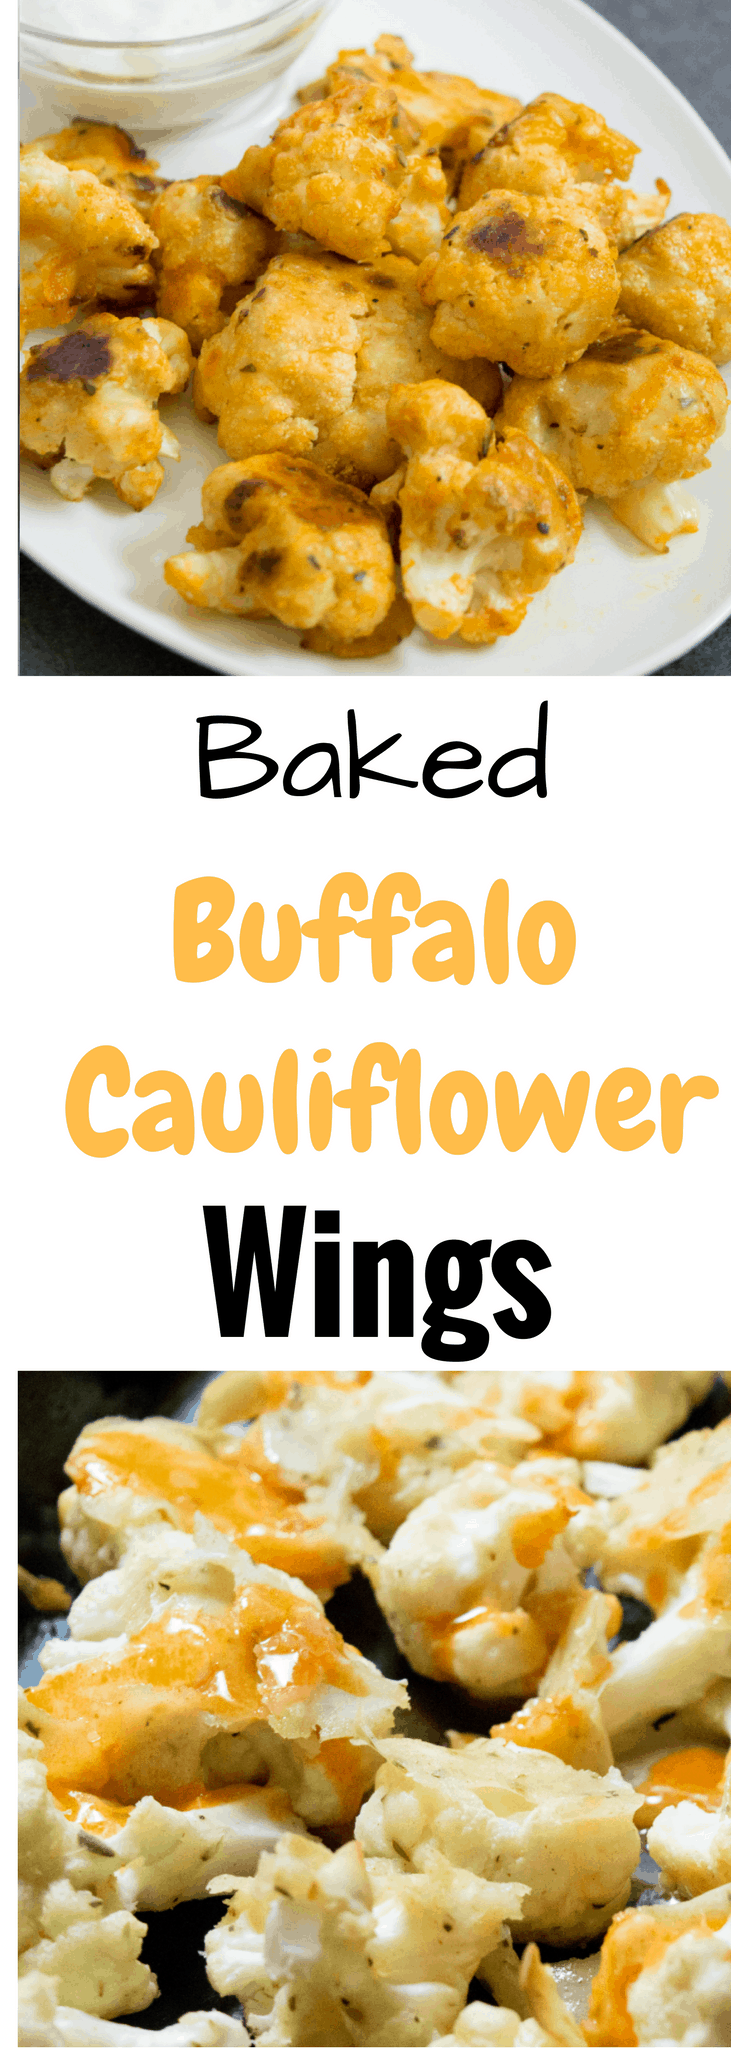 Buffalo Cauliflower Wings Recipe